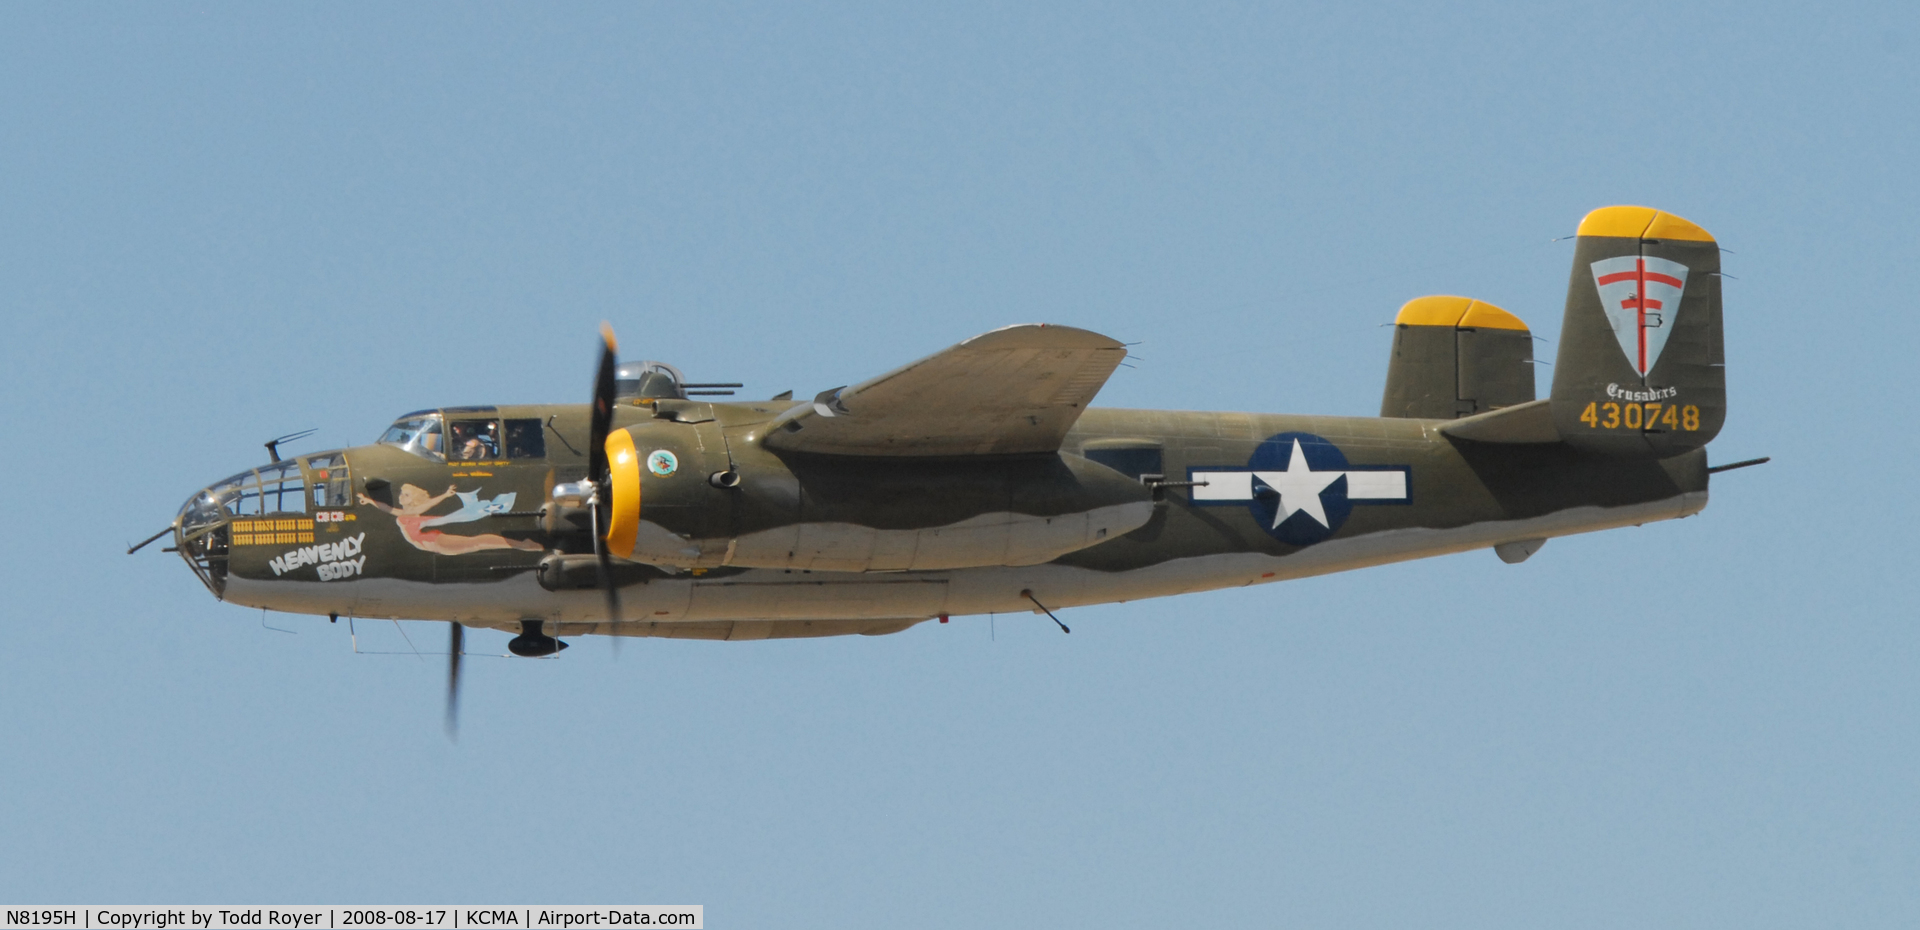 N8195H, 1944 North American TB-25N Mitchell C/N 108-34023 (44-30748), Camarillo Airshow 2008